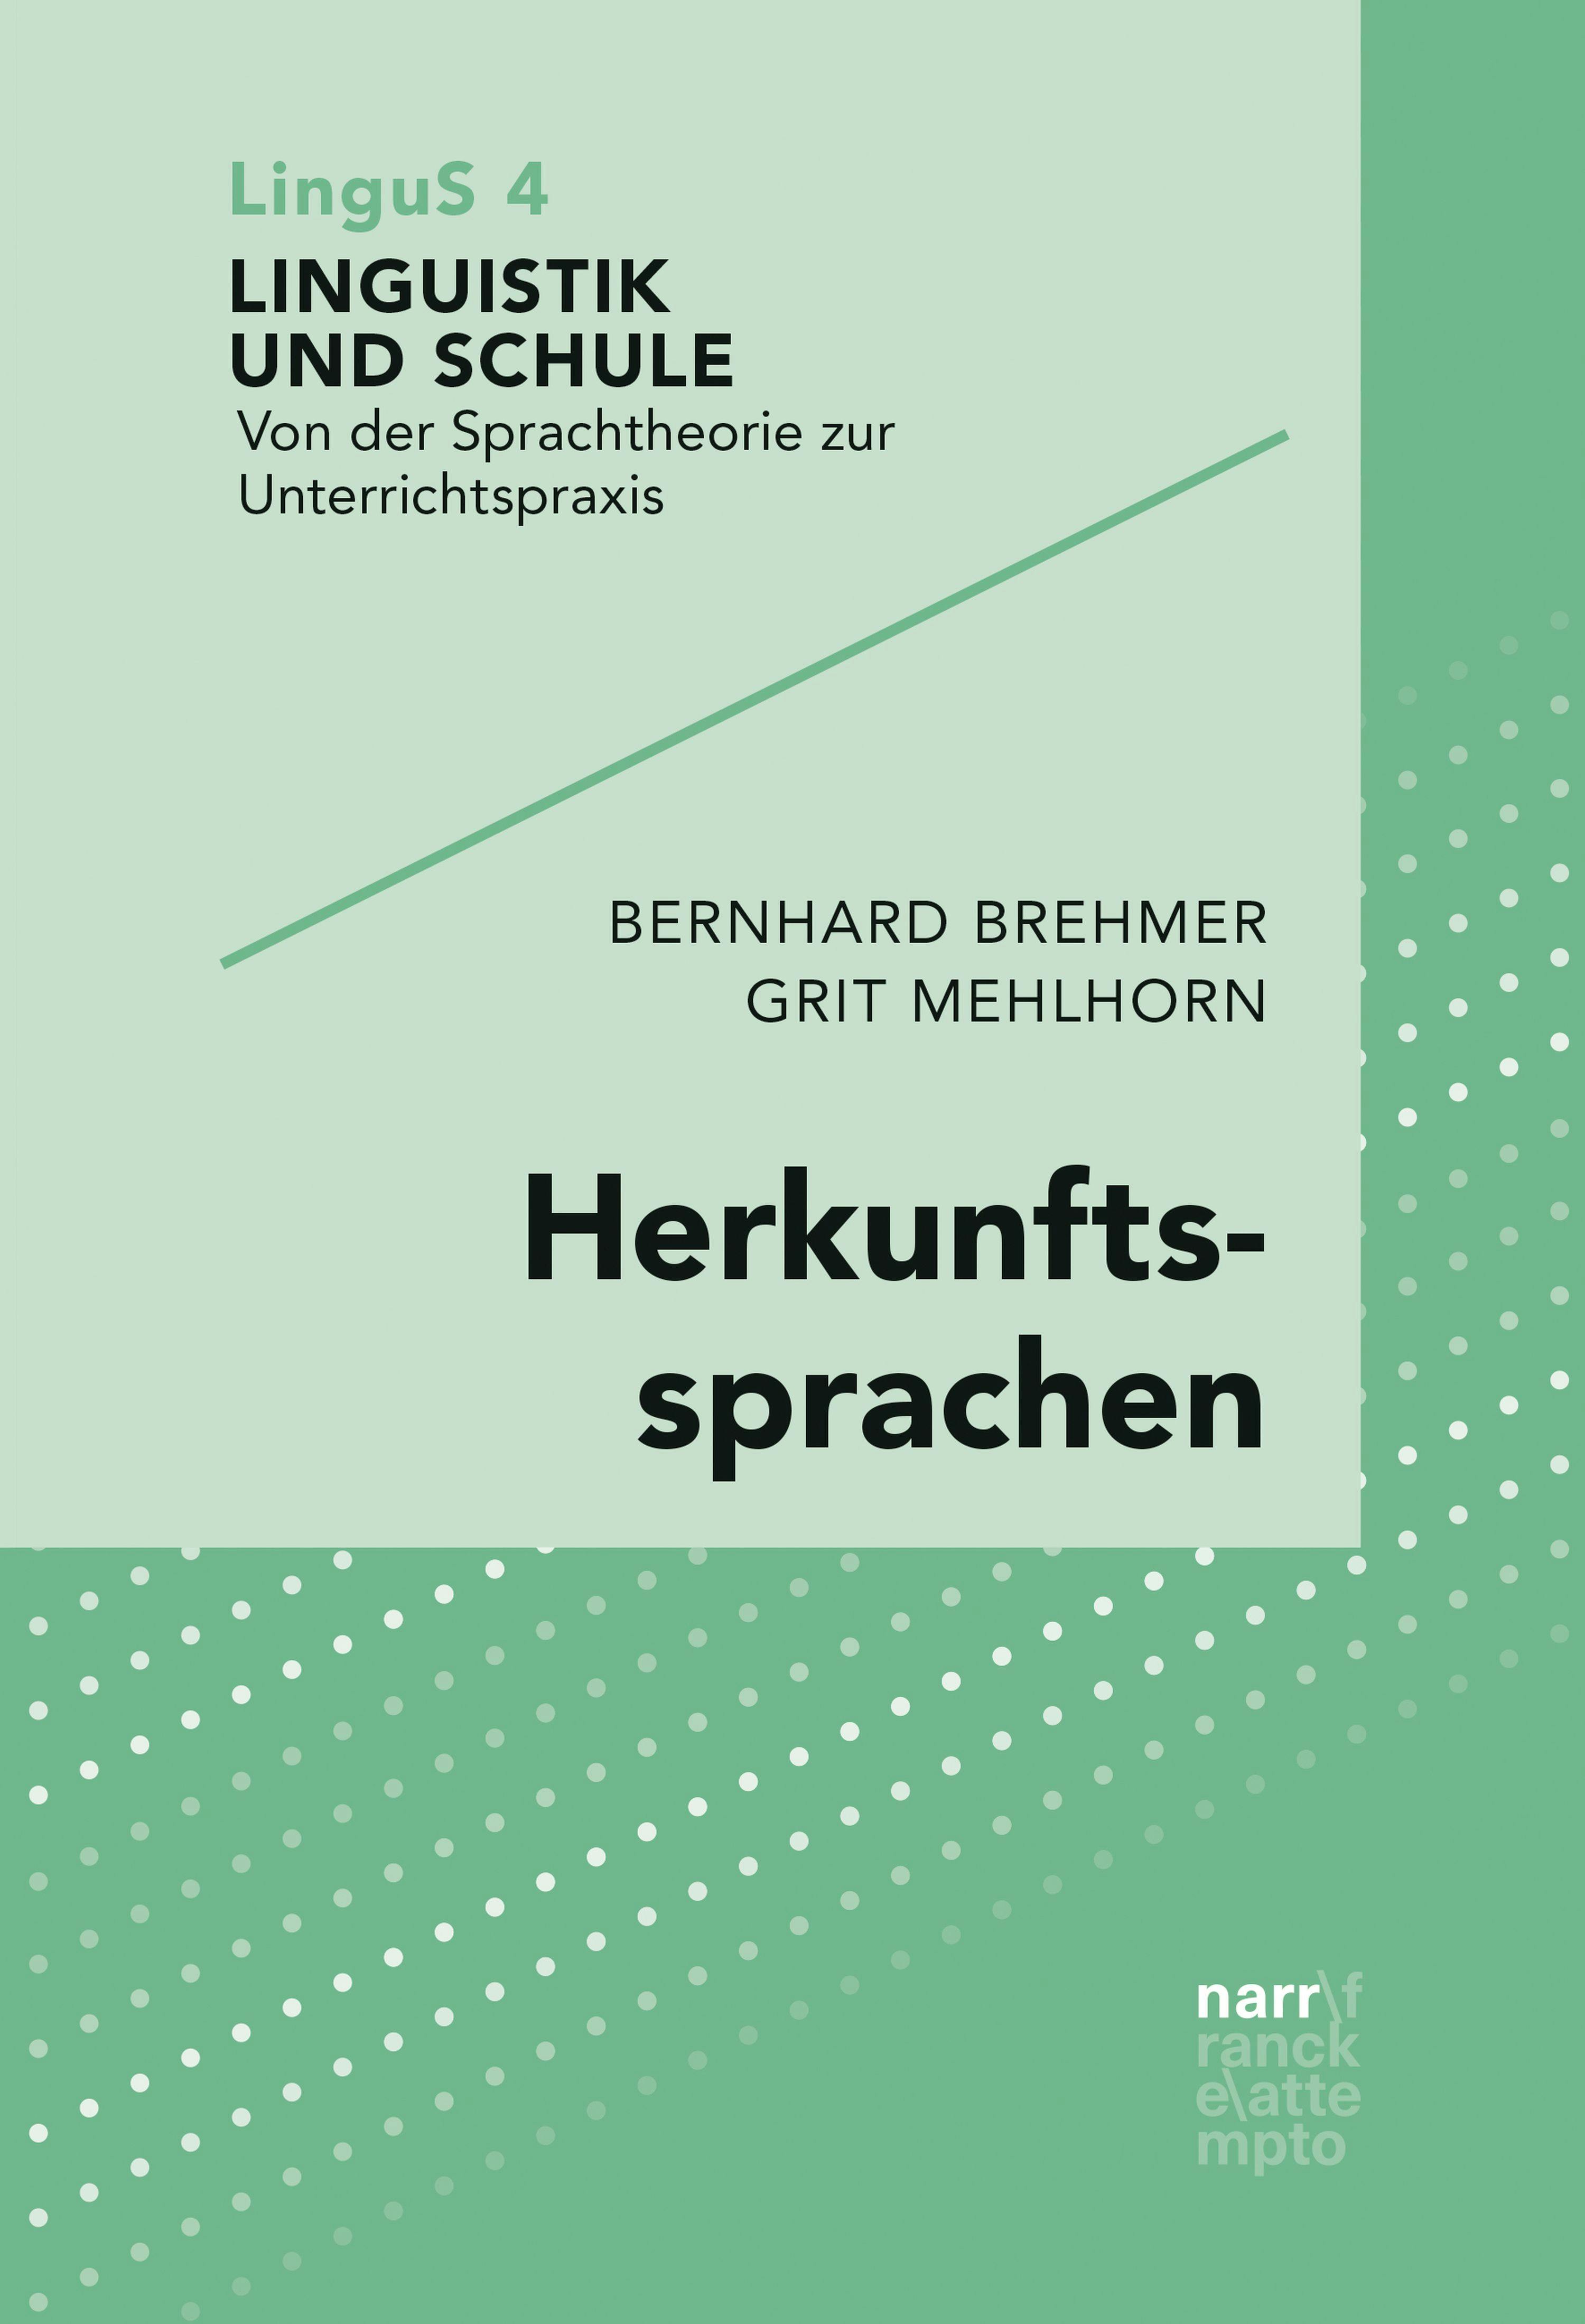 Herkunftssprachen - Grit Mehlhorn, Bernhard Brehmer